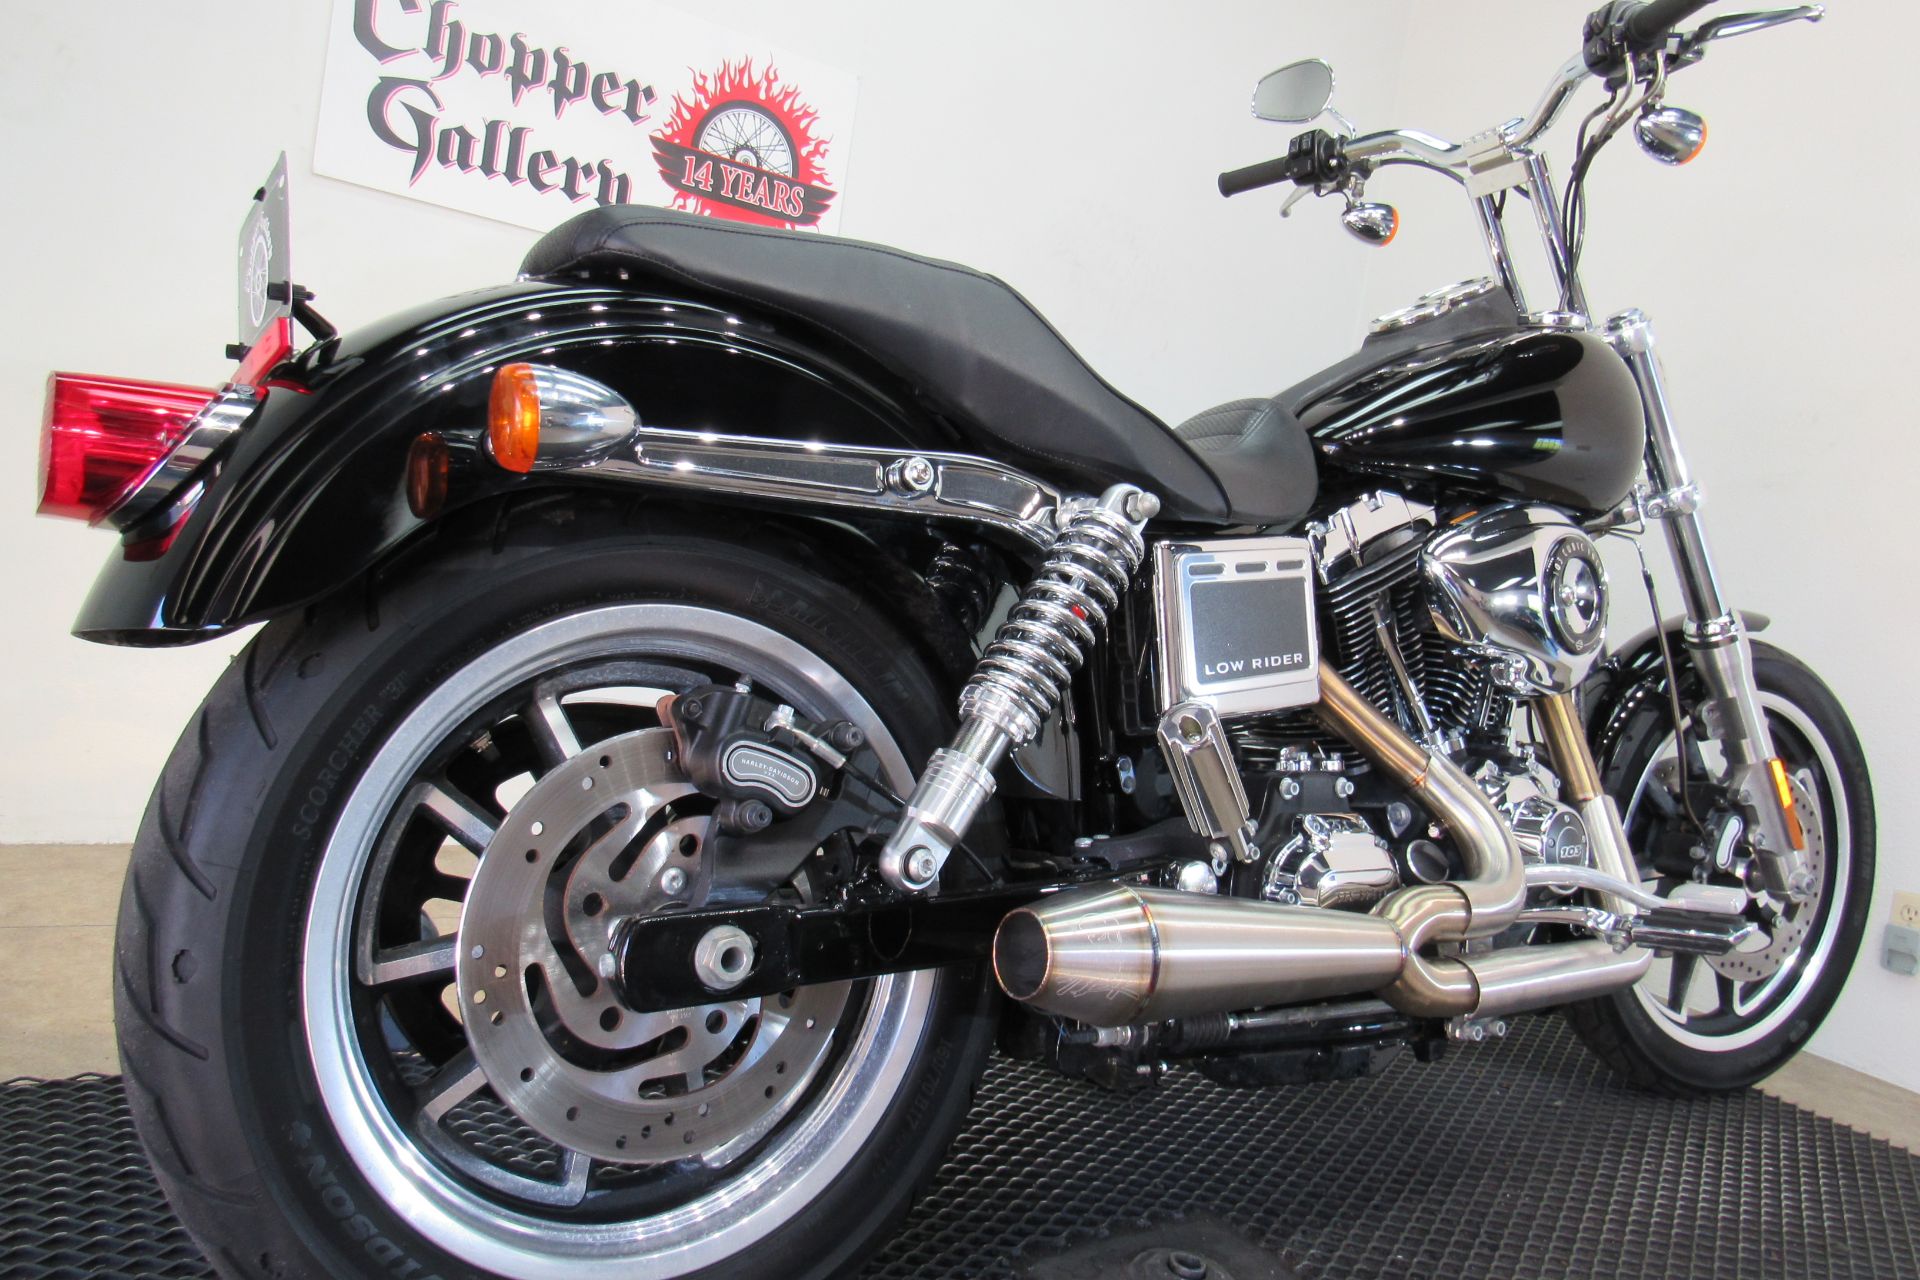 2014 Harley-Davidson Low Rider in Temecula, California - Photo 26